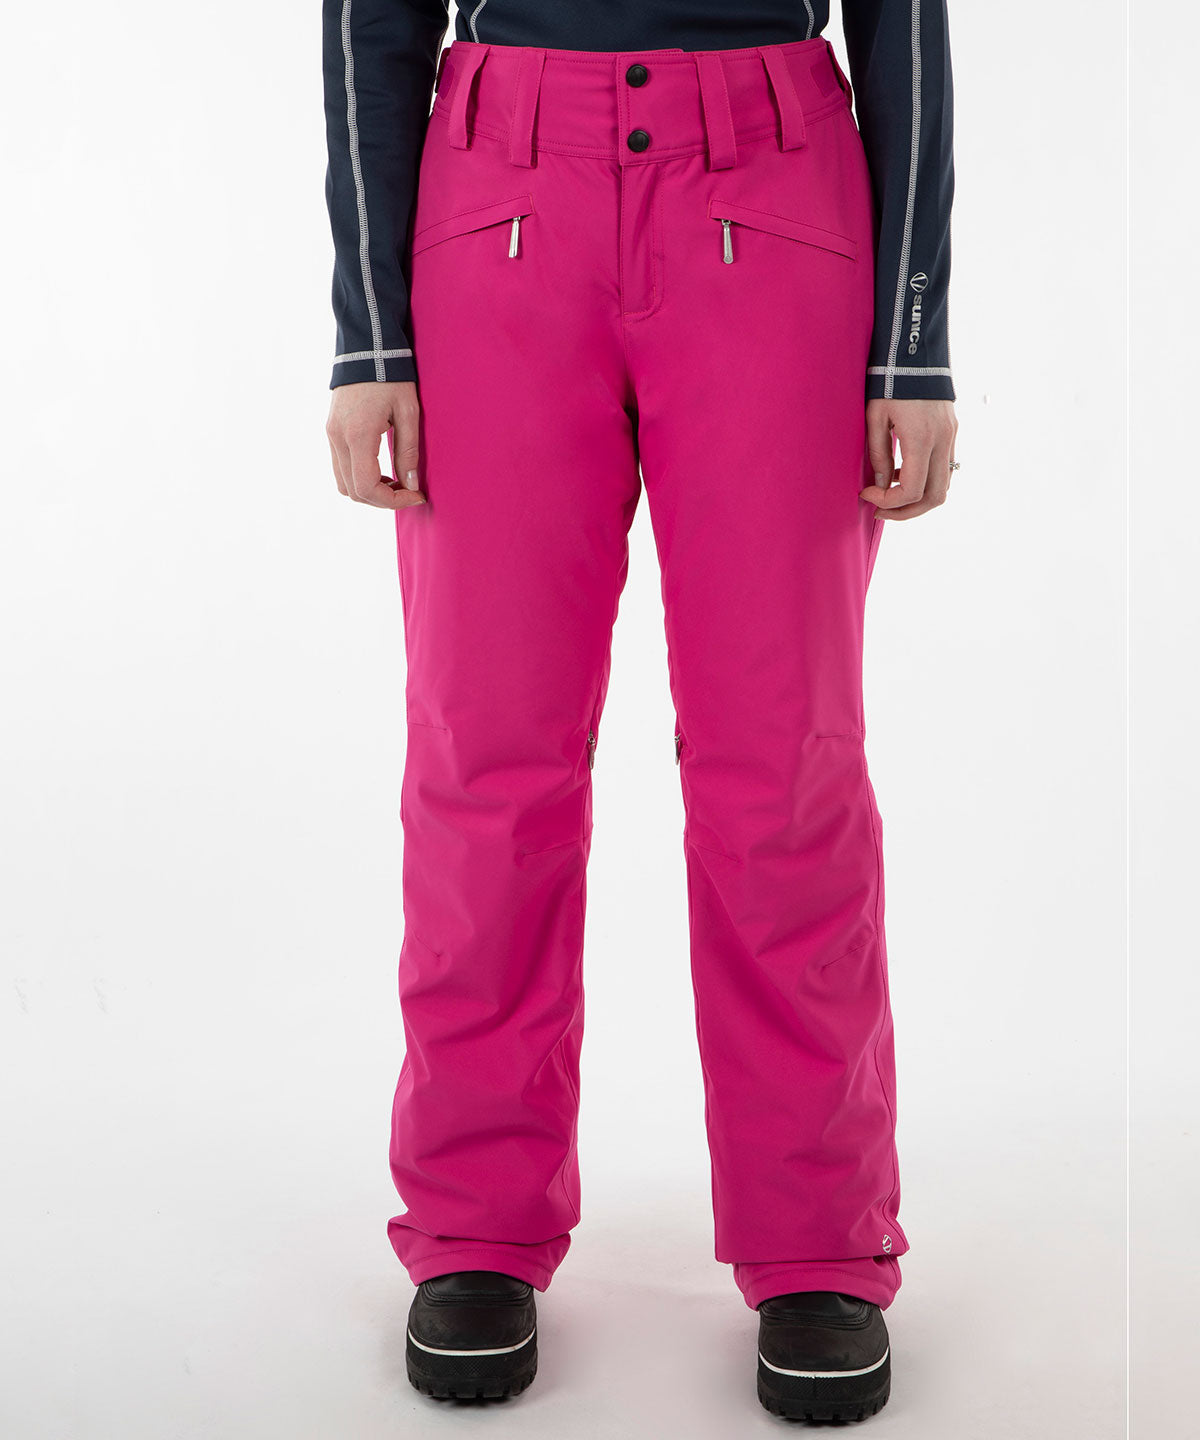 Seventy Insulated Ski Pant - Crabapple (Pink) - Womens